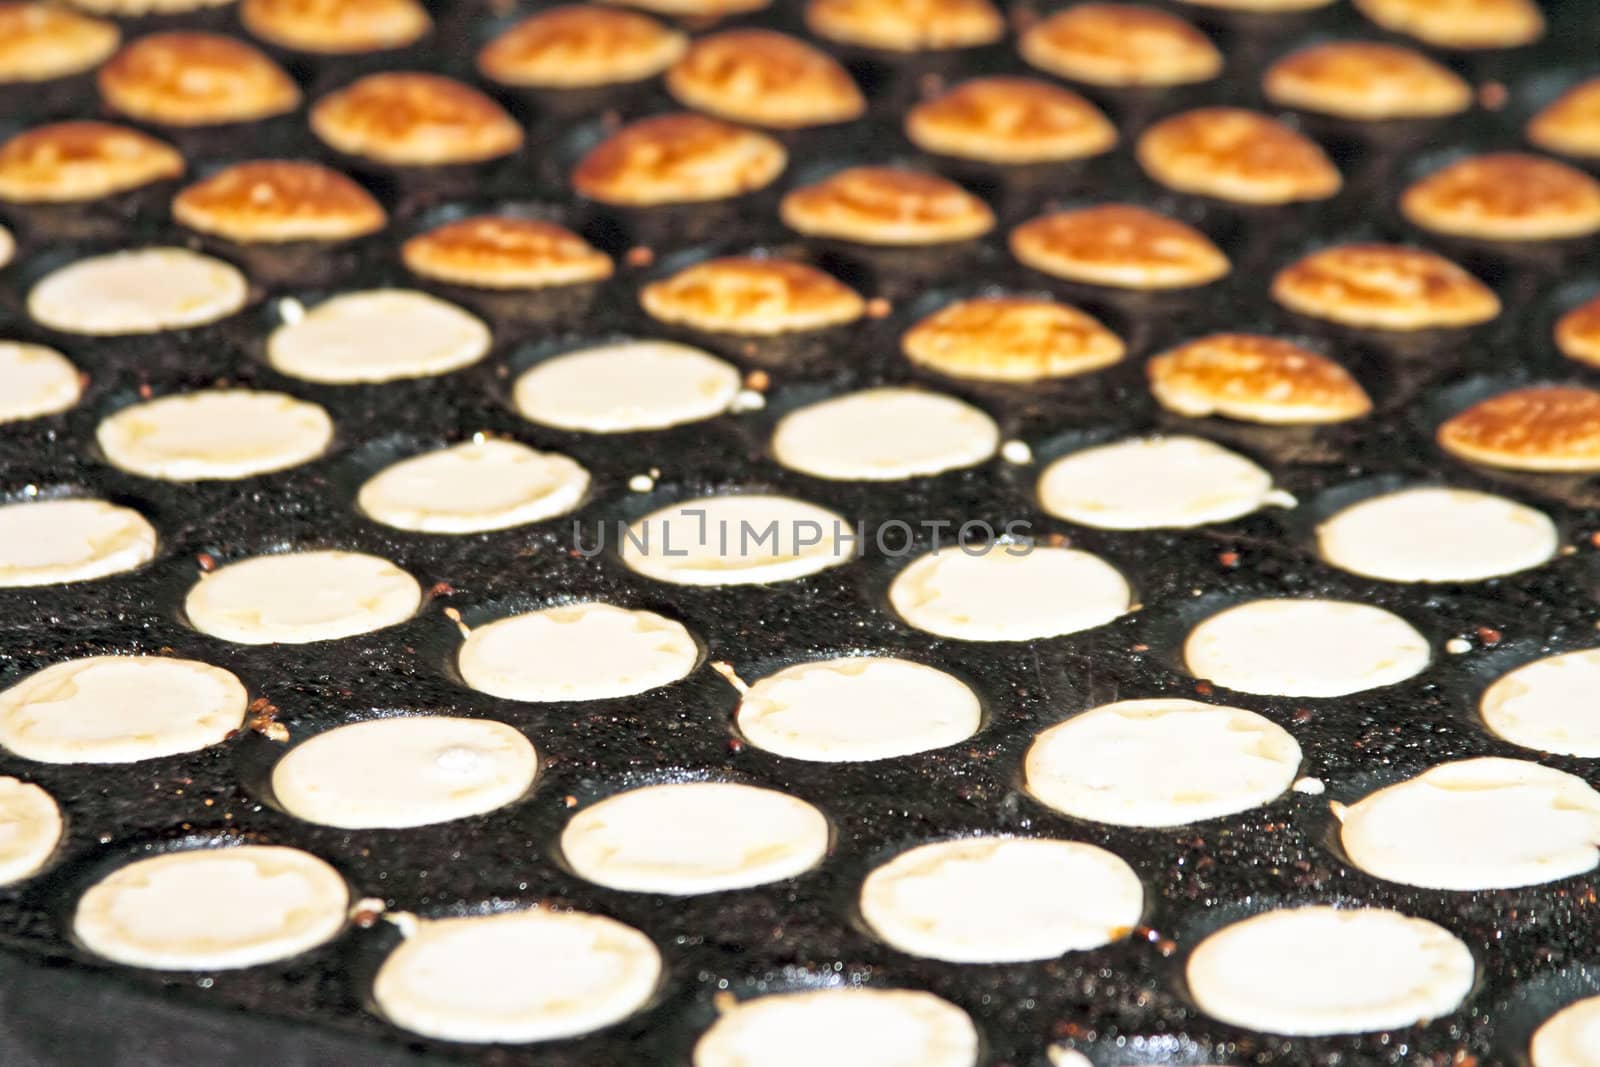 freshly baked traditional Dutch mini pancakes called "poffertjes